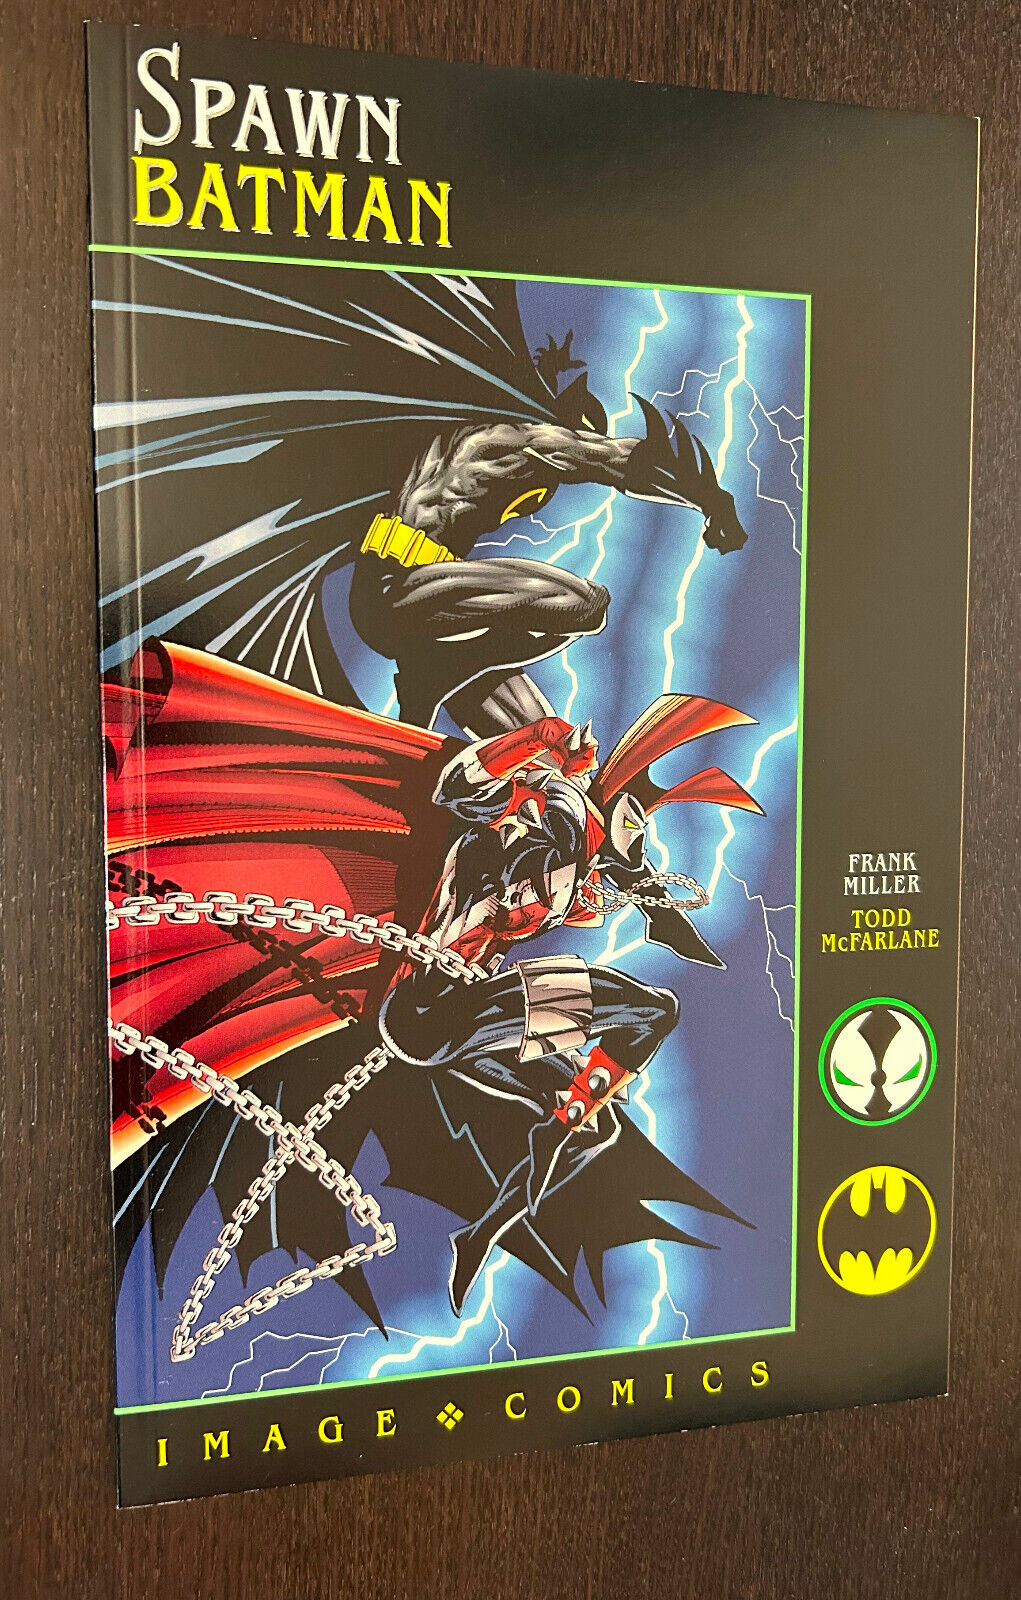 SPAWN BATMAN #1 (Image Comics 1994) -- Miller / McFarlane -- NM- Or Better